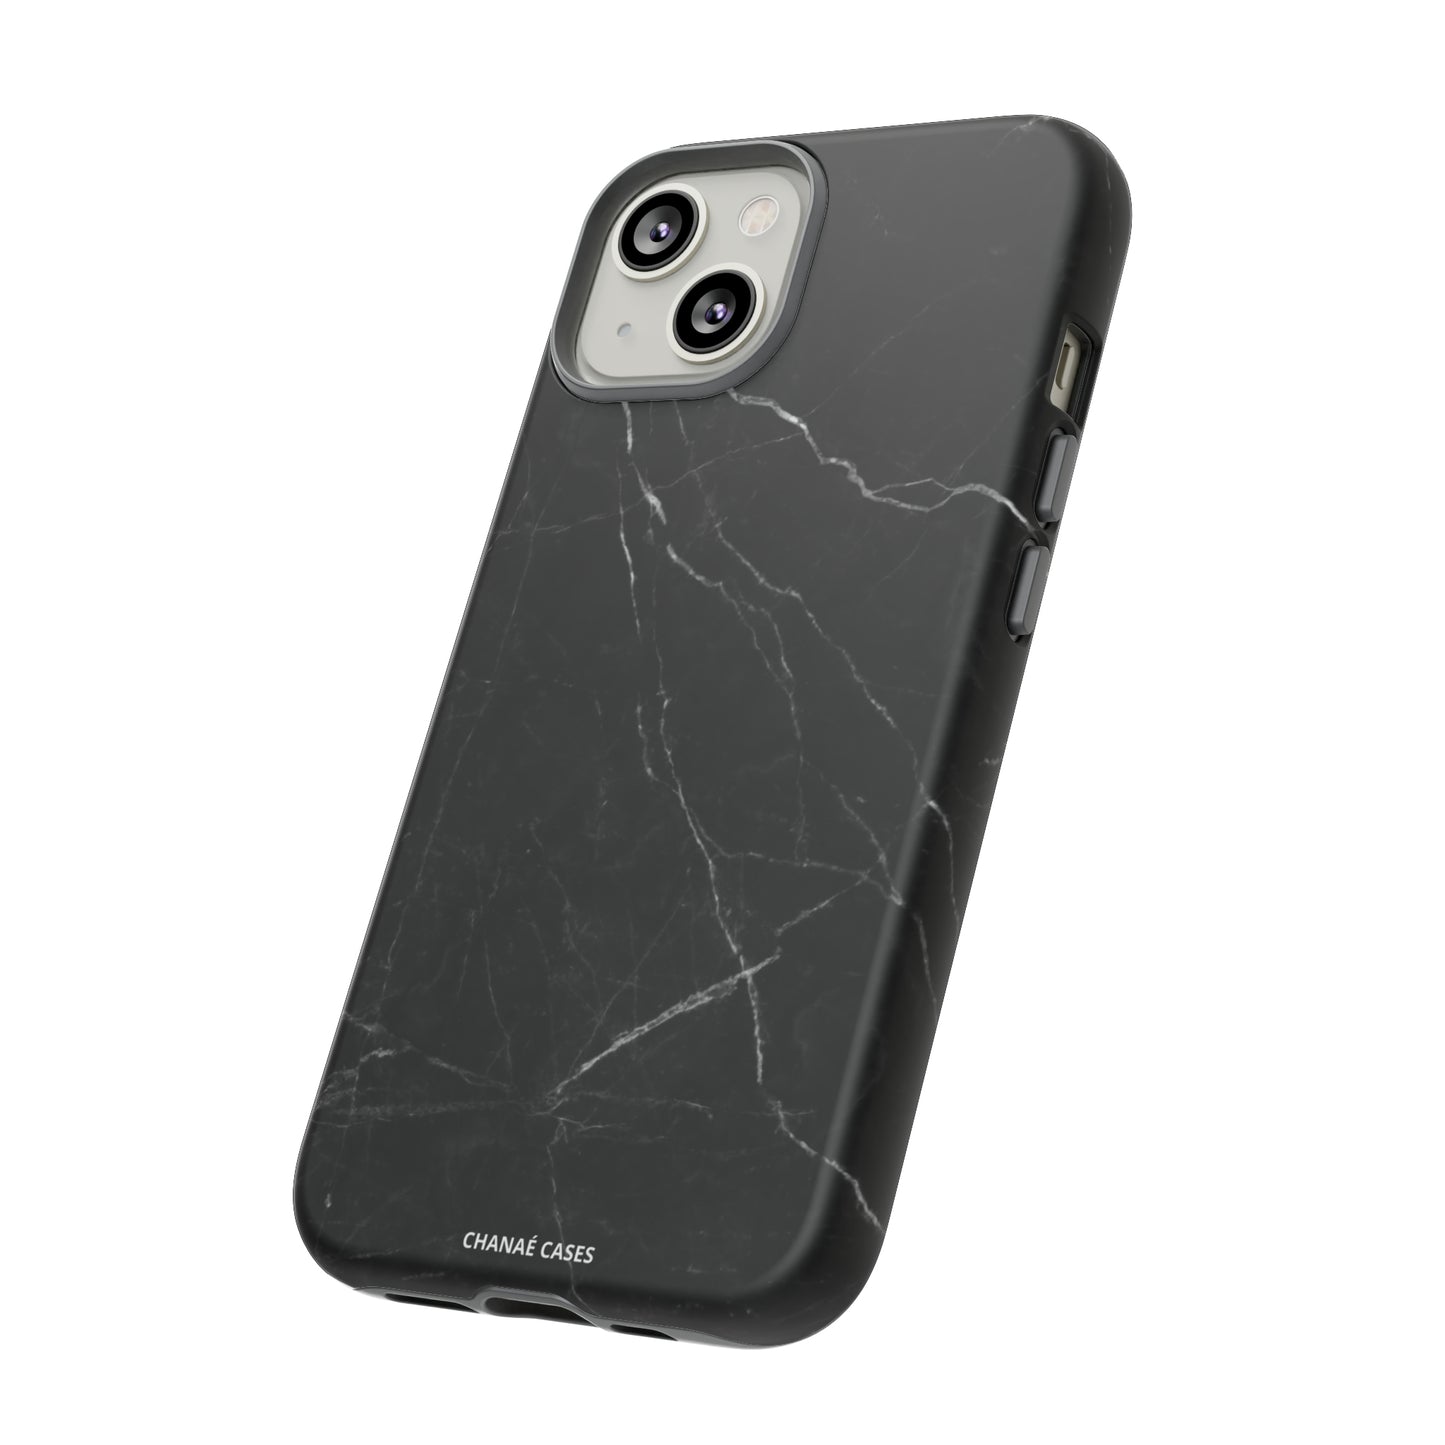 Titan Marble iPhone "Tough" Case (Black)